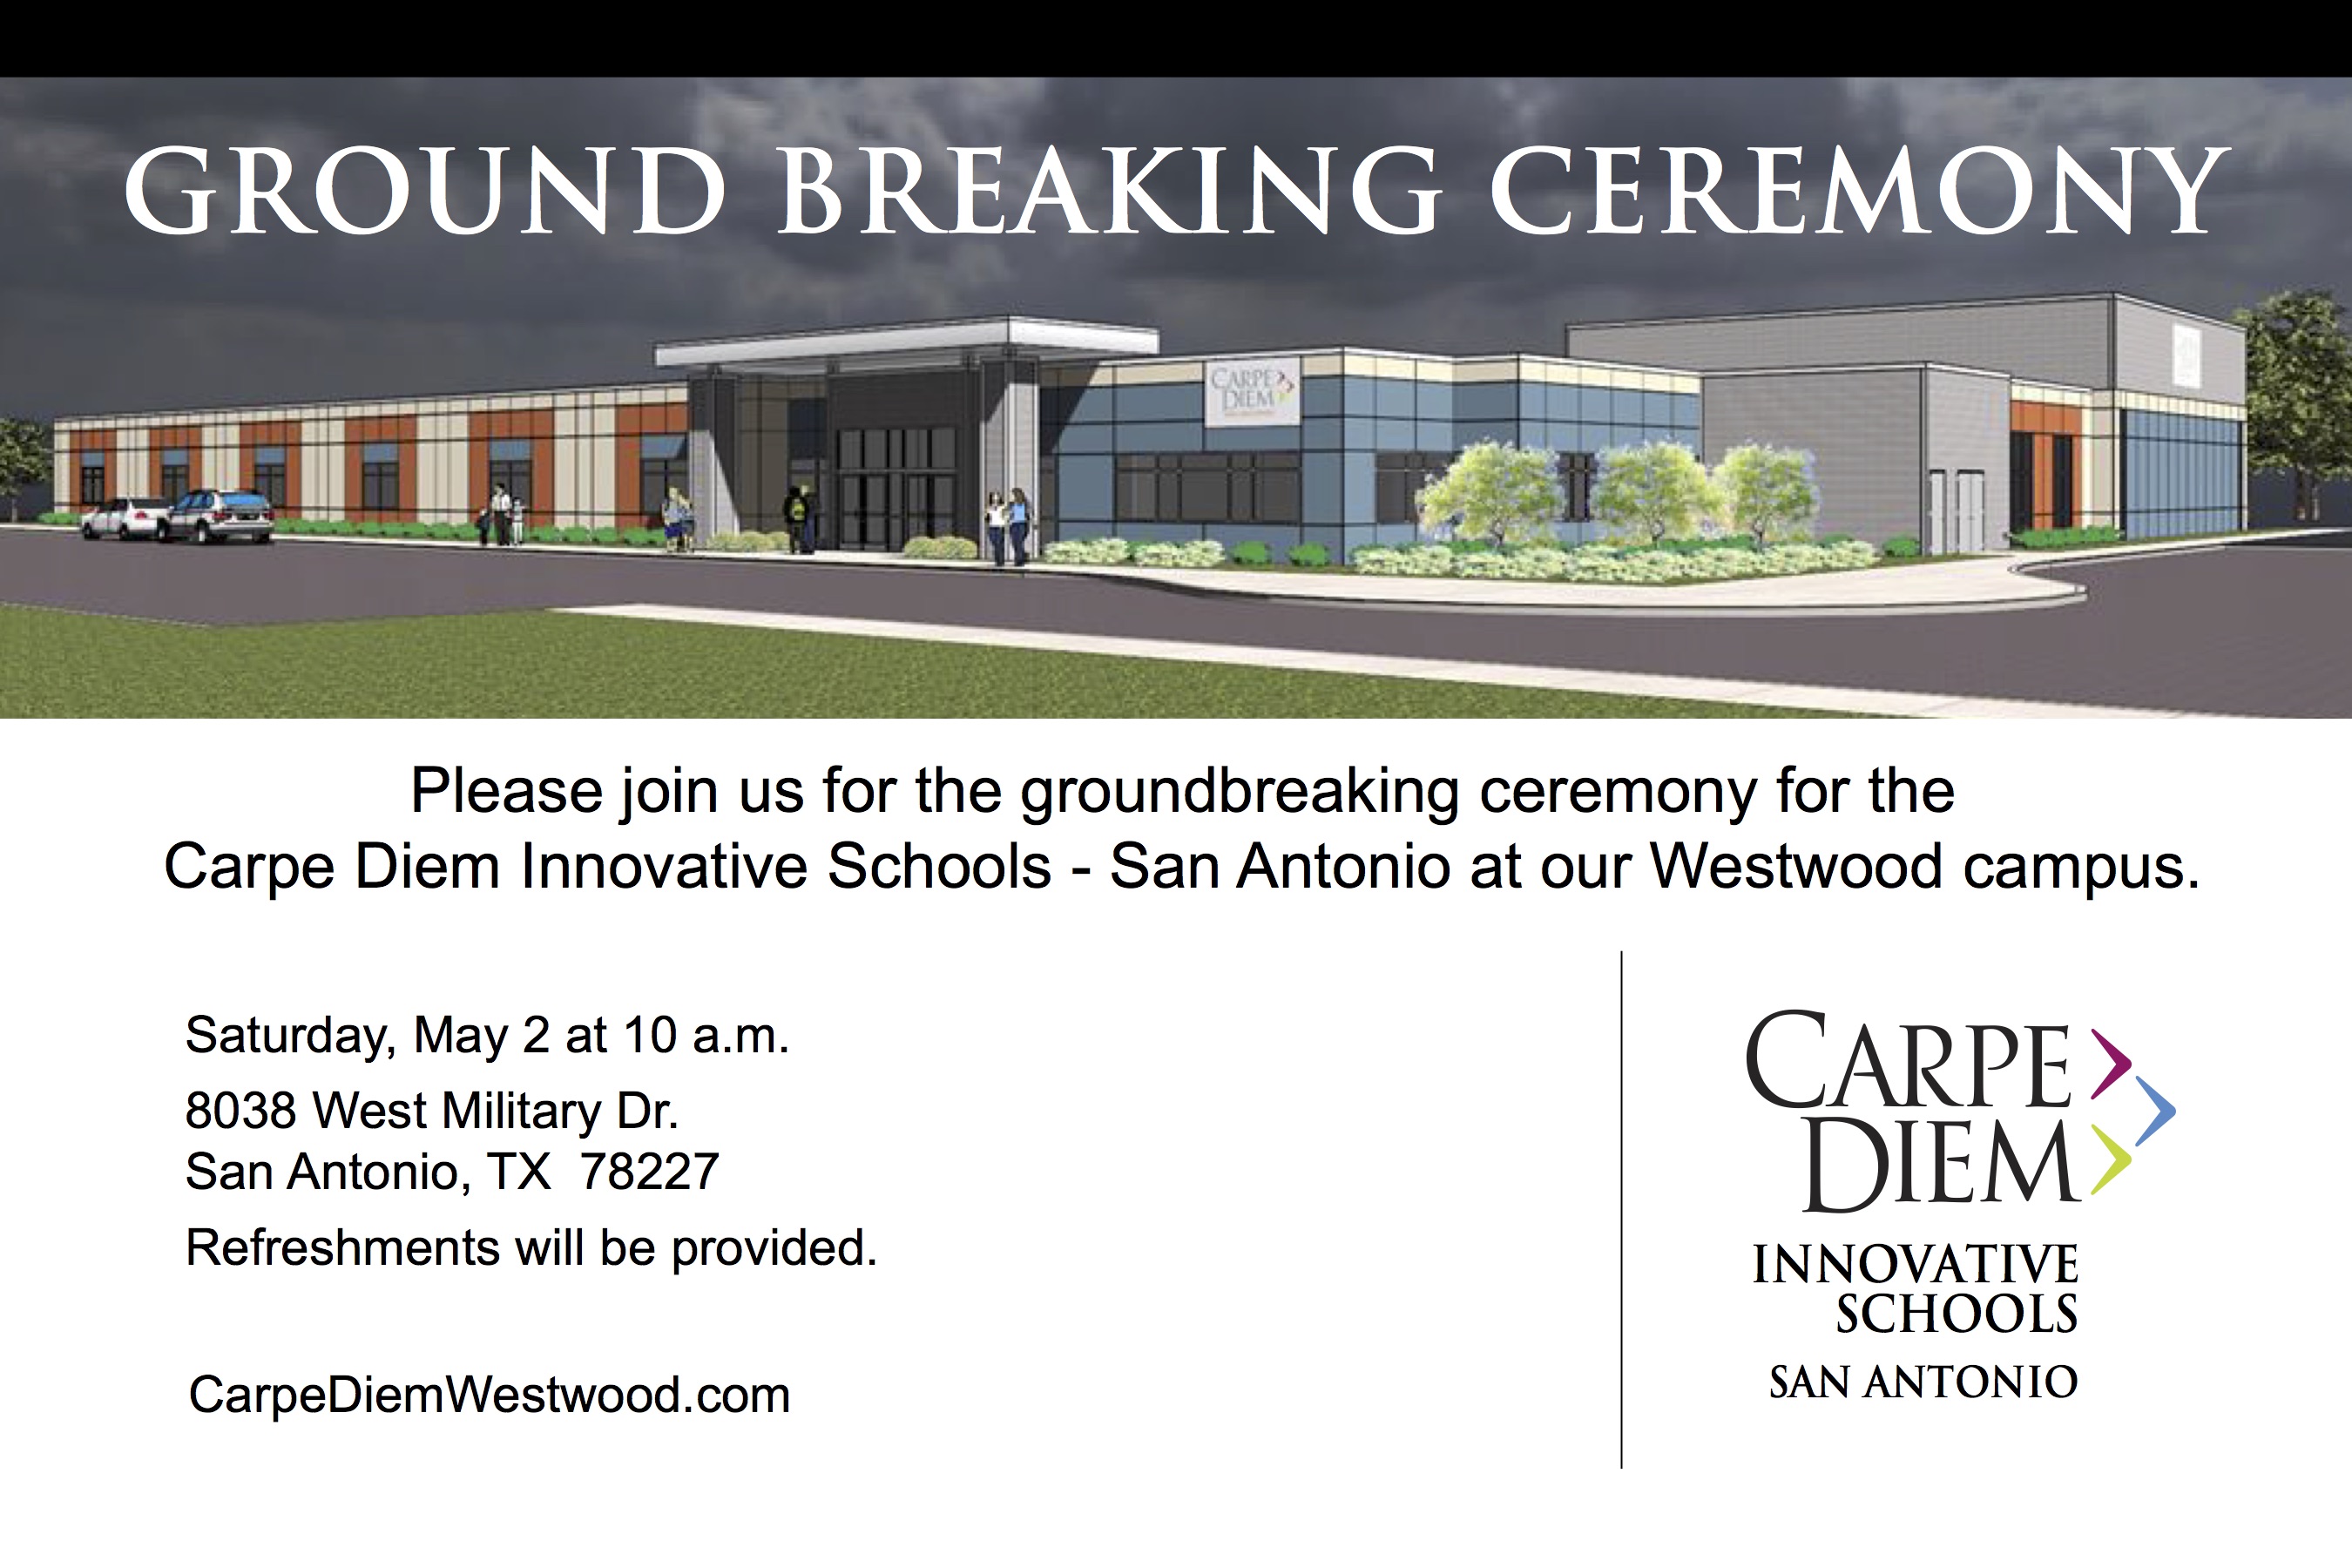 Carpe Diem Innovative Schools San Antonio Groundbreaking Ceremony